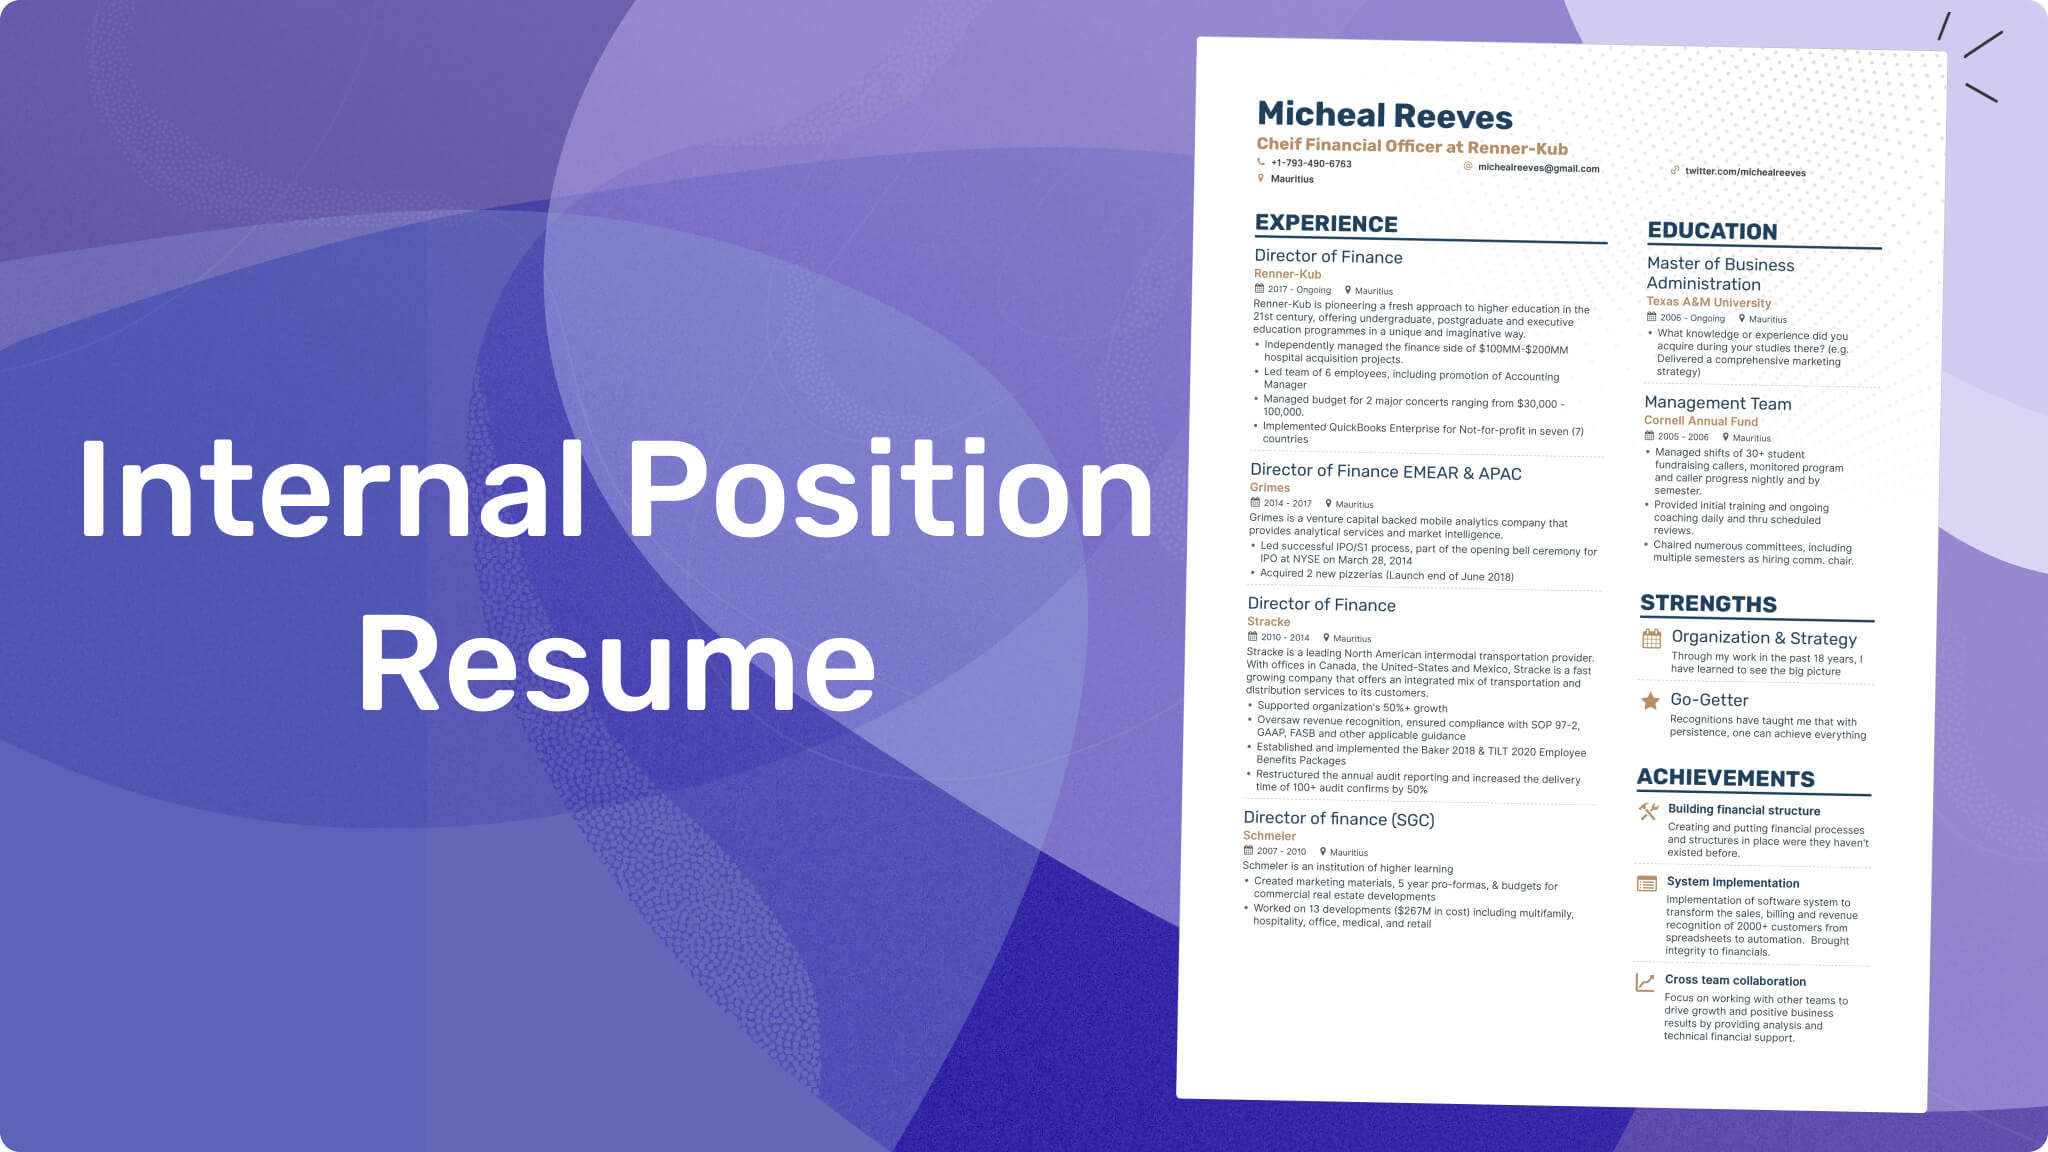 Sample Resume Objectives for Internal Position Resume for Internal Position â How to Make One